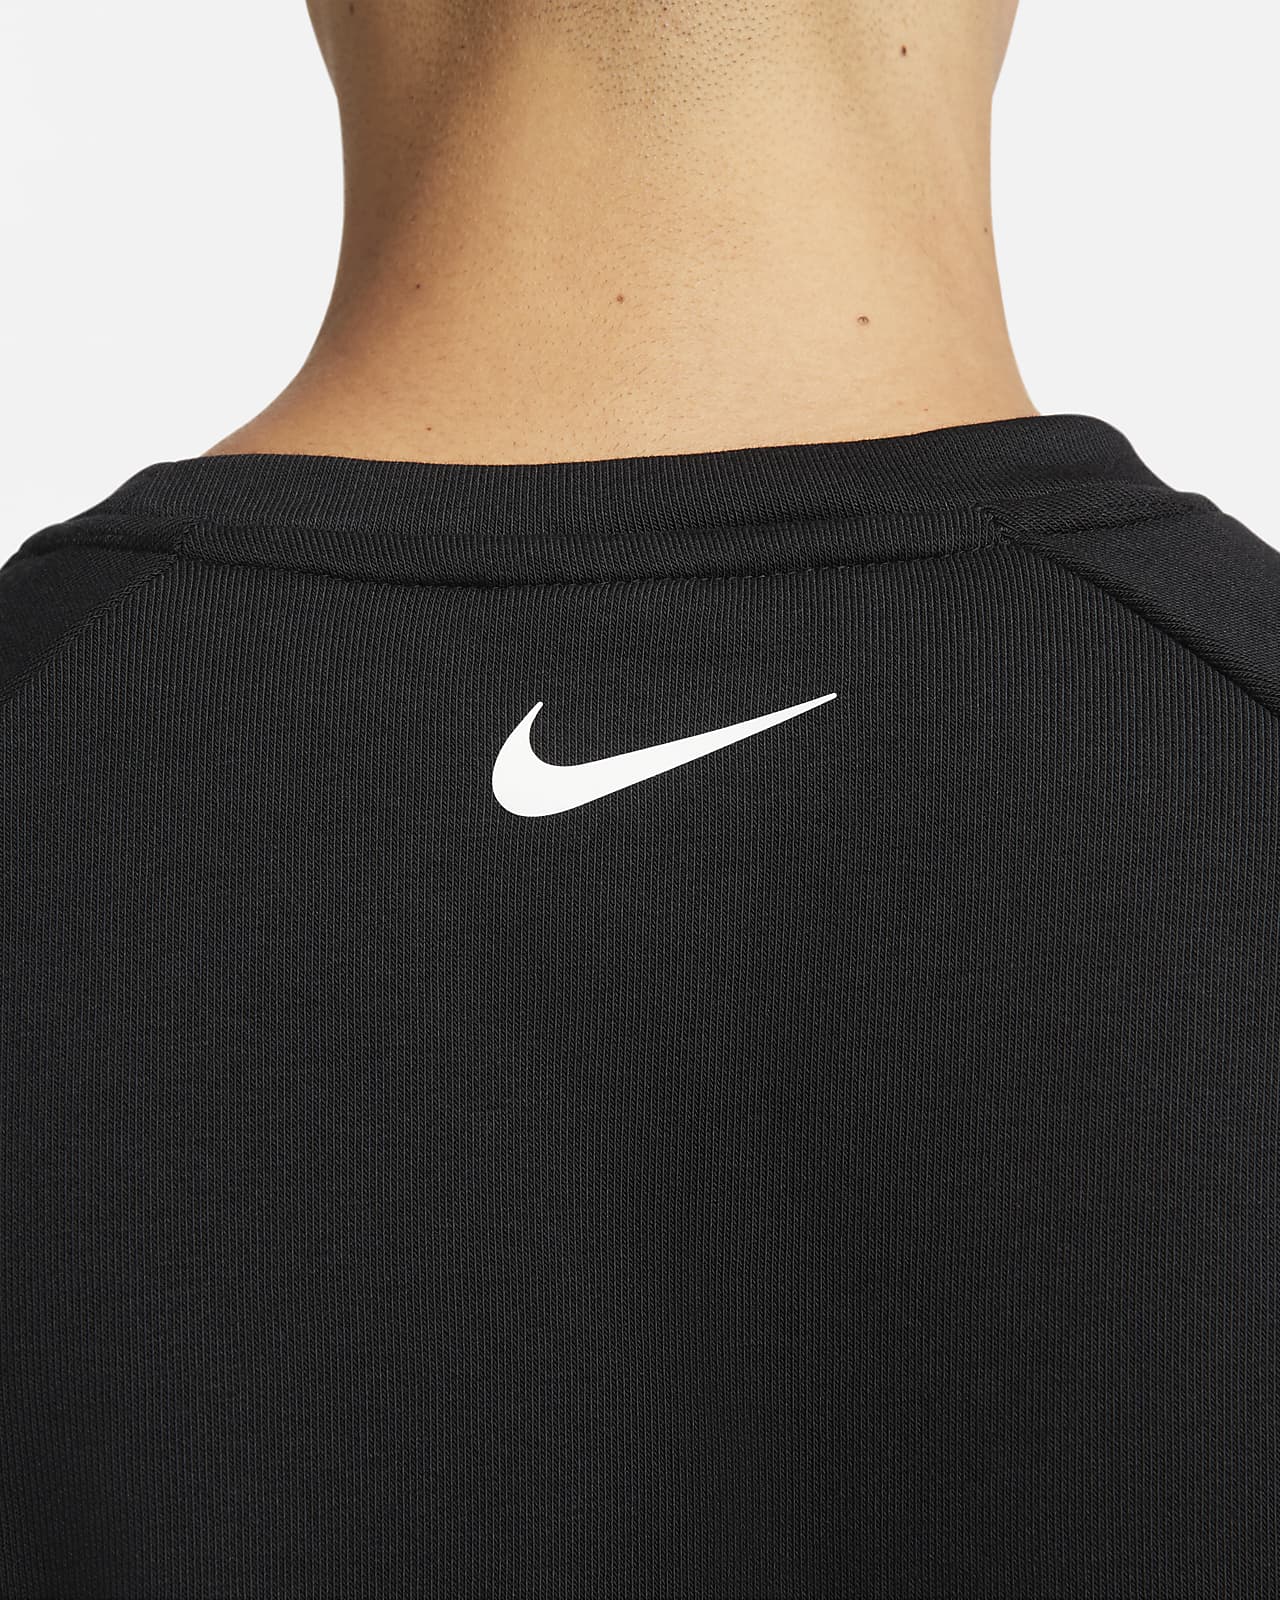 Nike Dri-FIT Men's Long-Sleeve Fitness Top